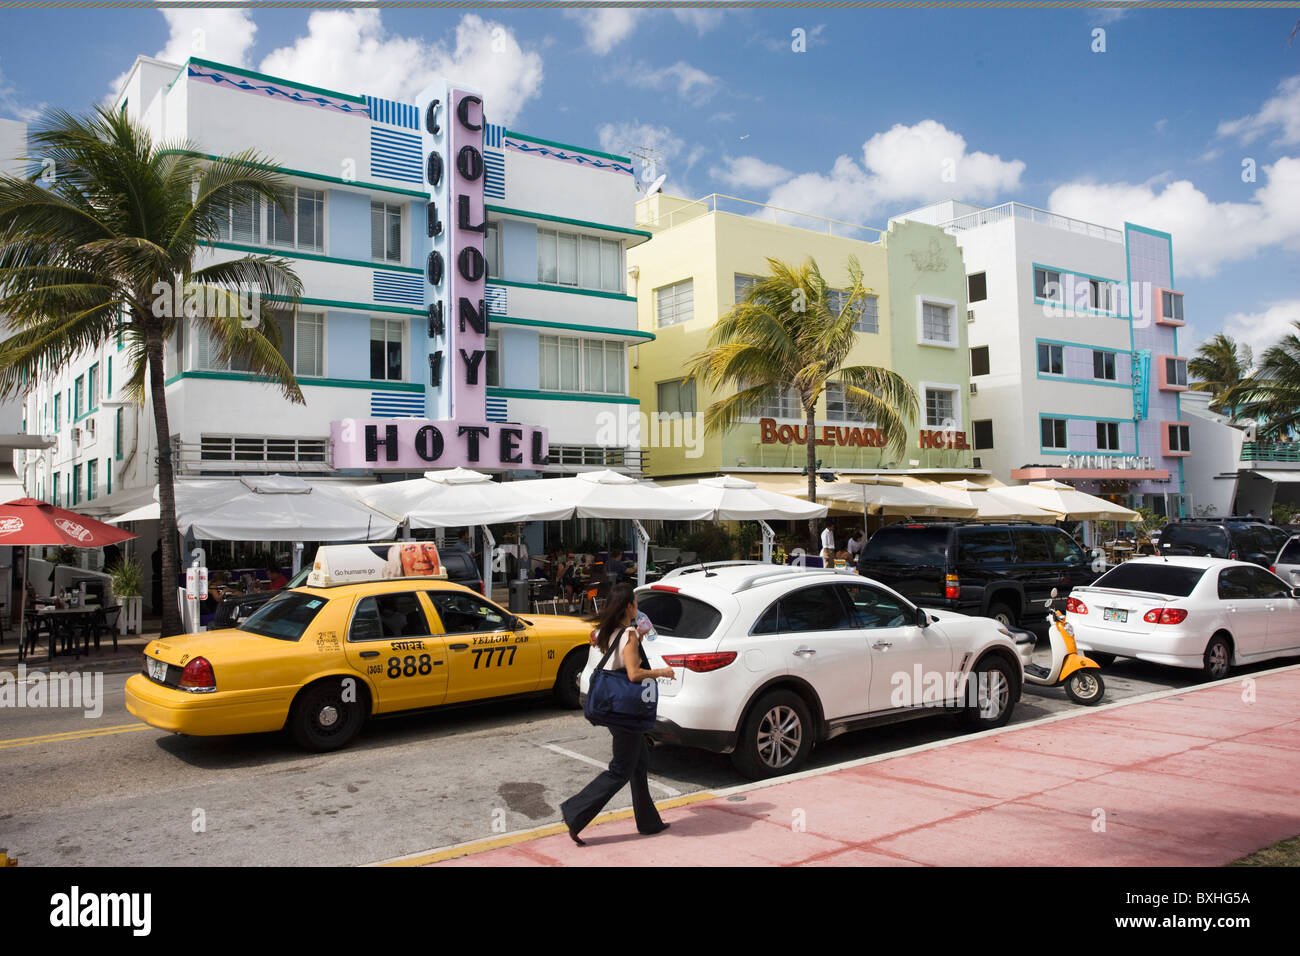 Colony Hotel art deco architecture on Ocean Drive, South Beach, Miami, Florida, United States of America Stock Photo